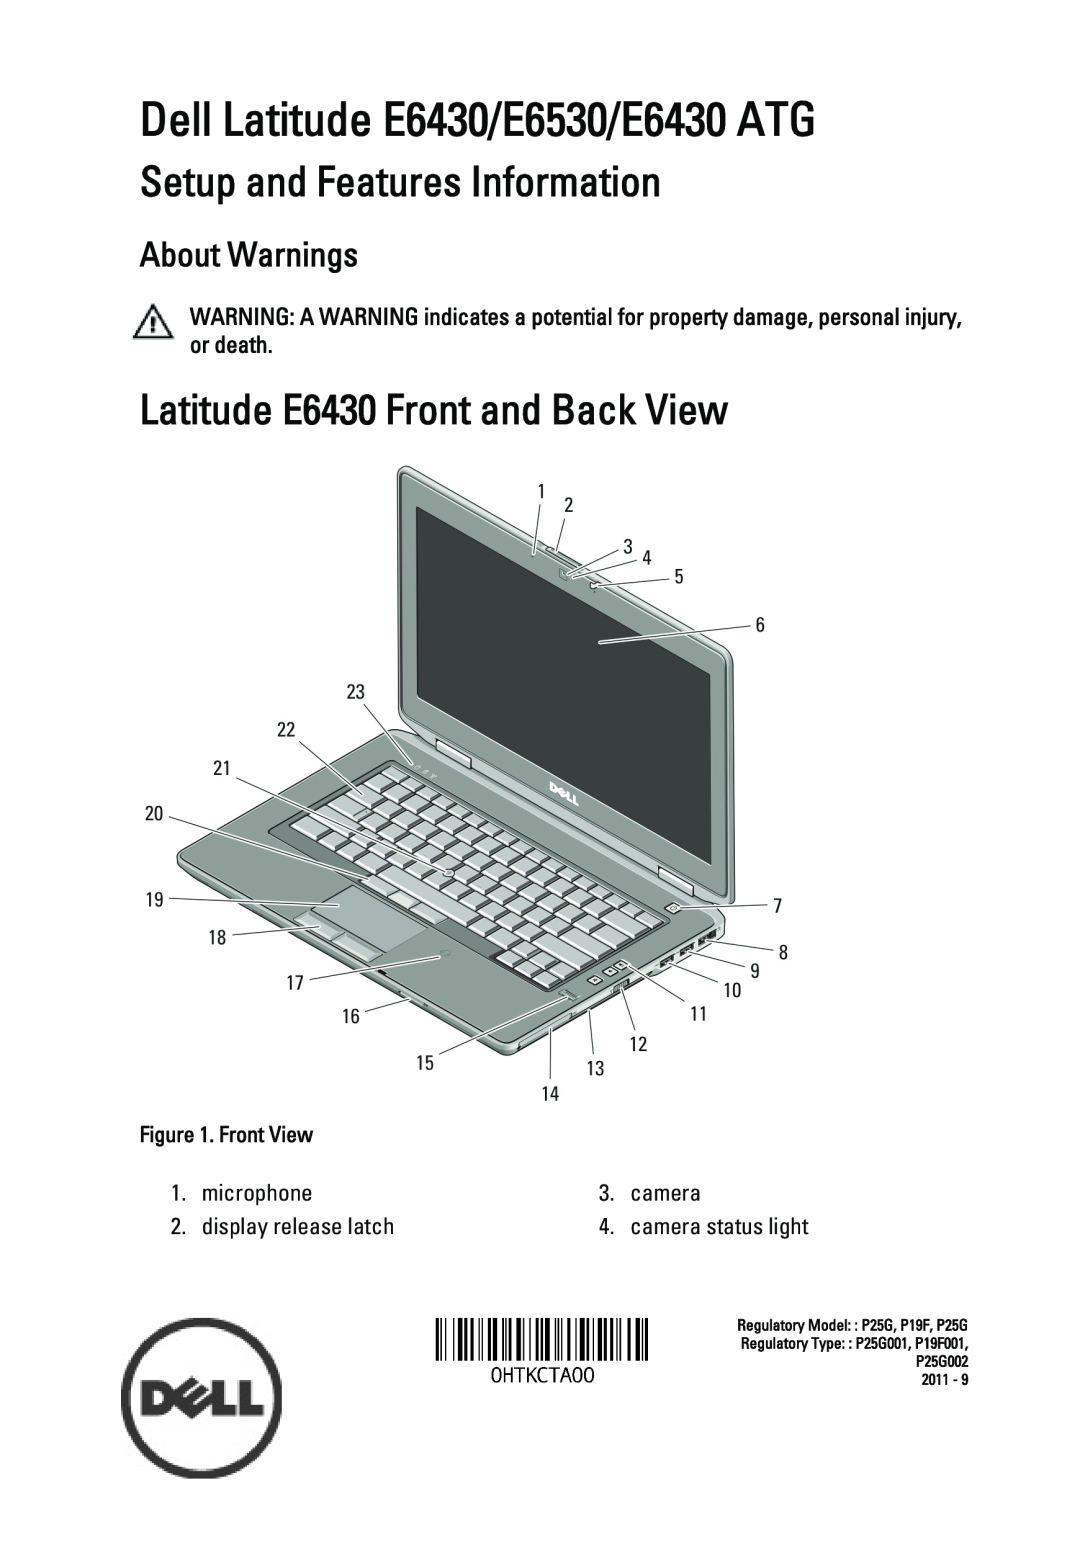 Dell manual Setup and Features Information, Latitude E6430 Front and Back View, Dell Latitude E6430/E6530/E6430 ATG 